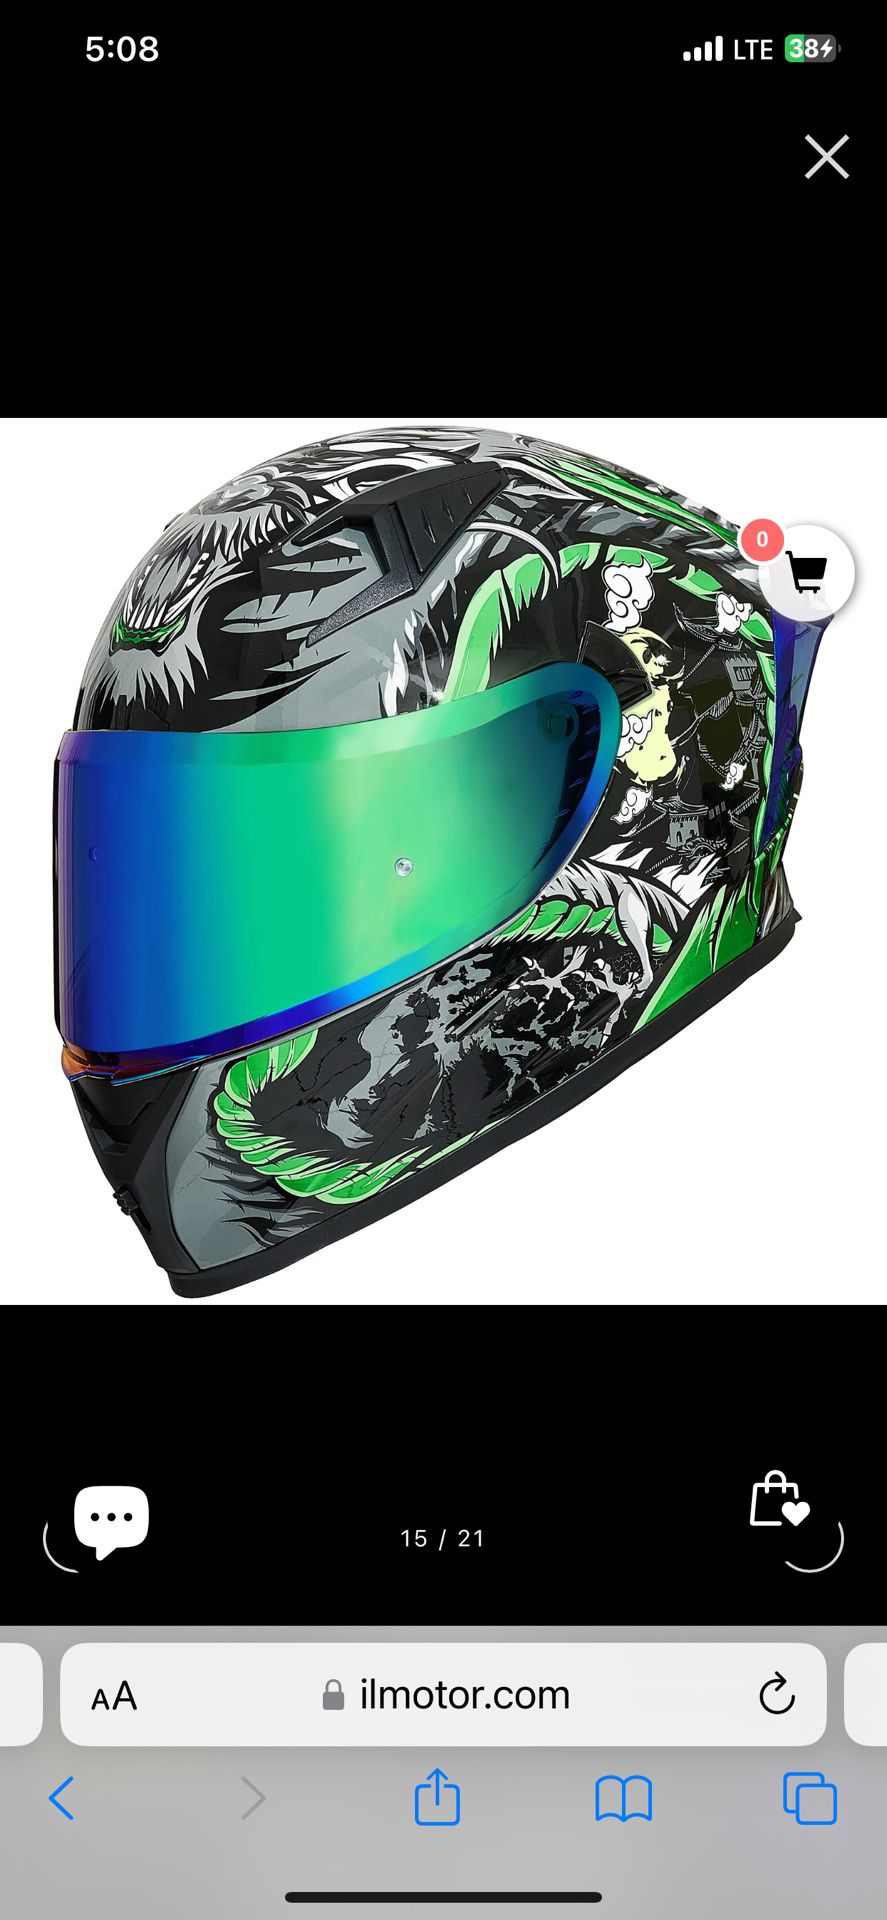 ILM Green Dragon Full face Helmet With Cardo